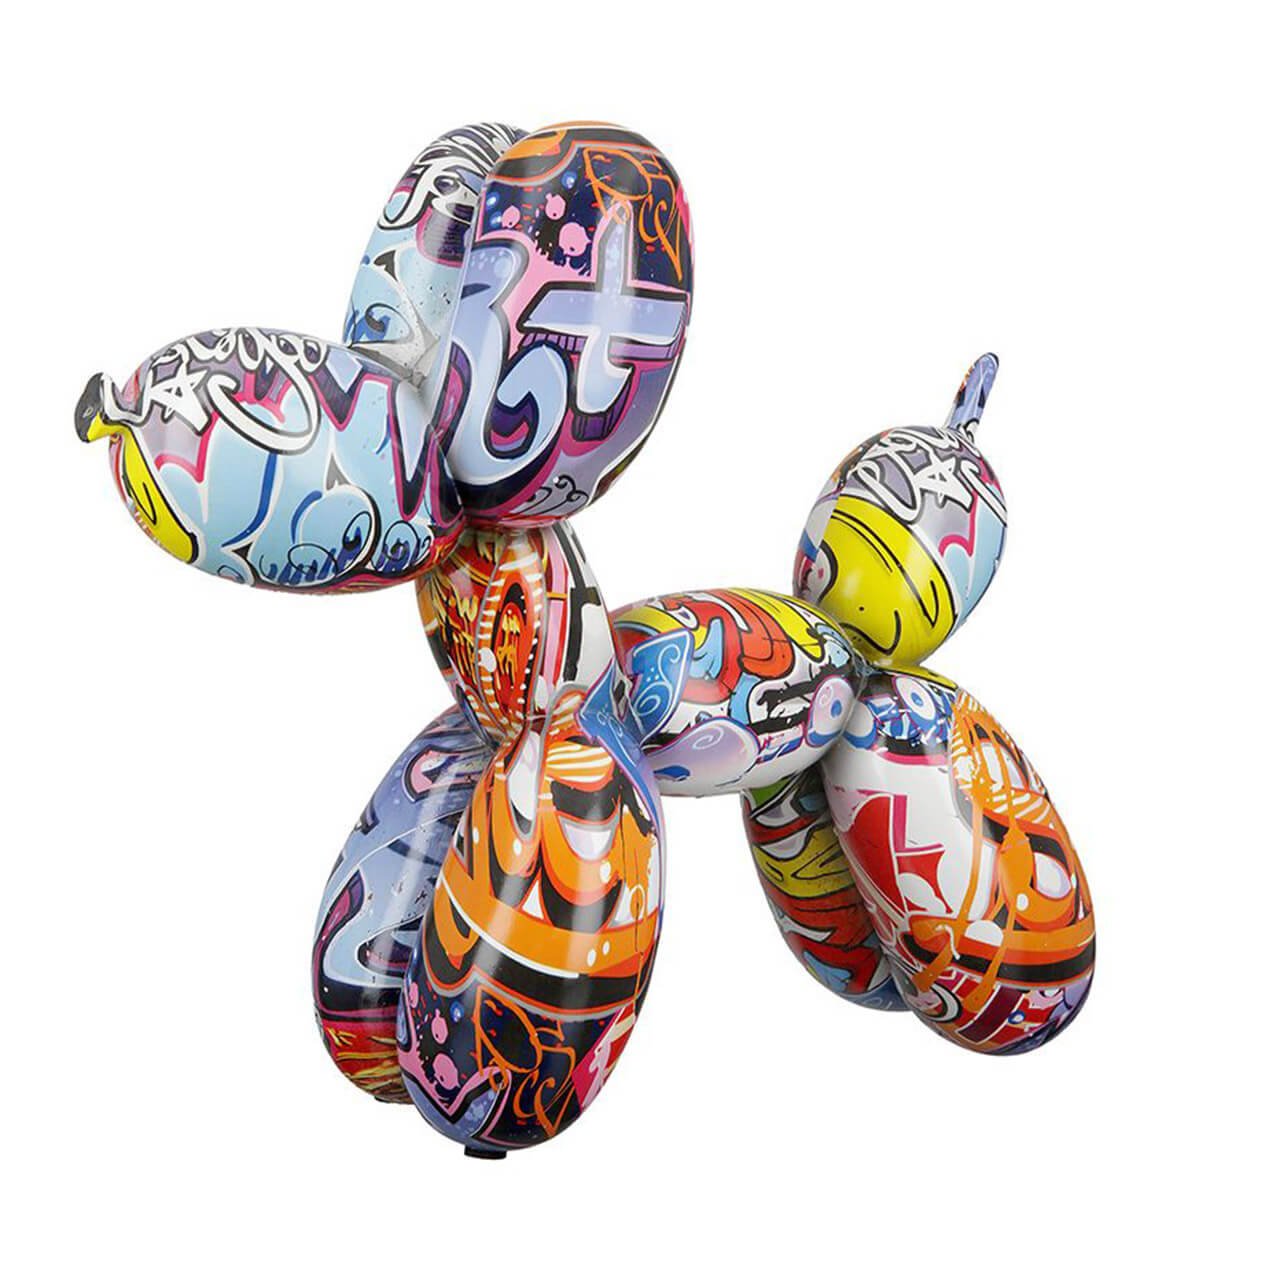 Jeff Koons Balloon Dog Graffiti | Street Art | H. 25 cm